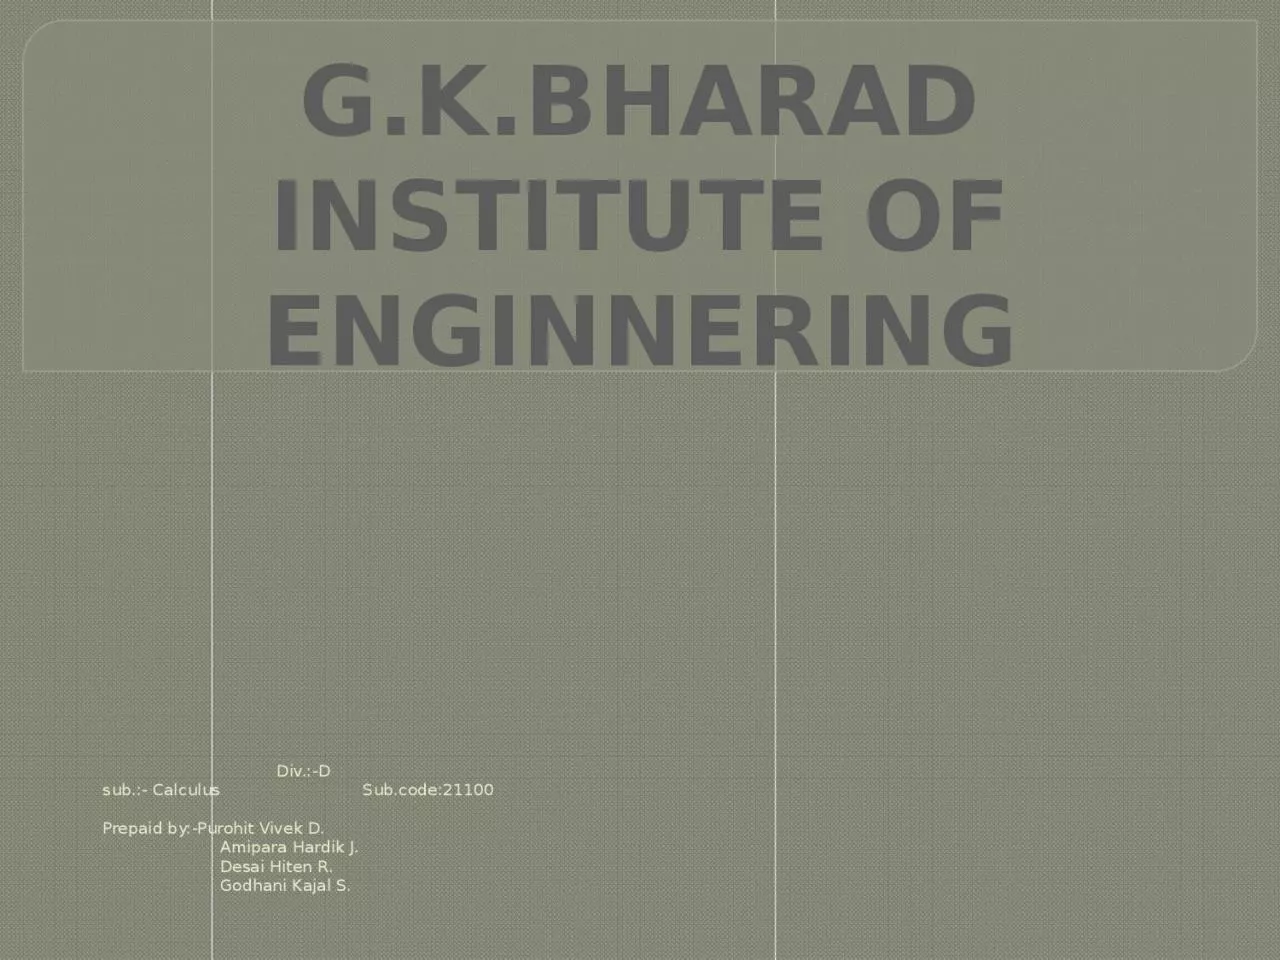 G.K.BHARAD INSTITUTE OF ENGINNERING